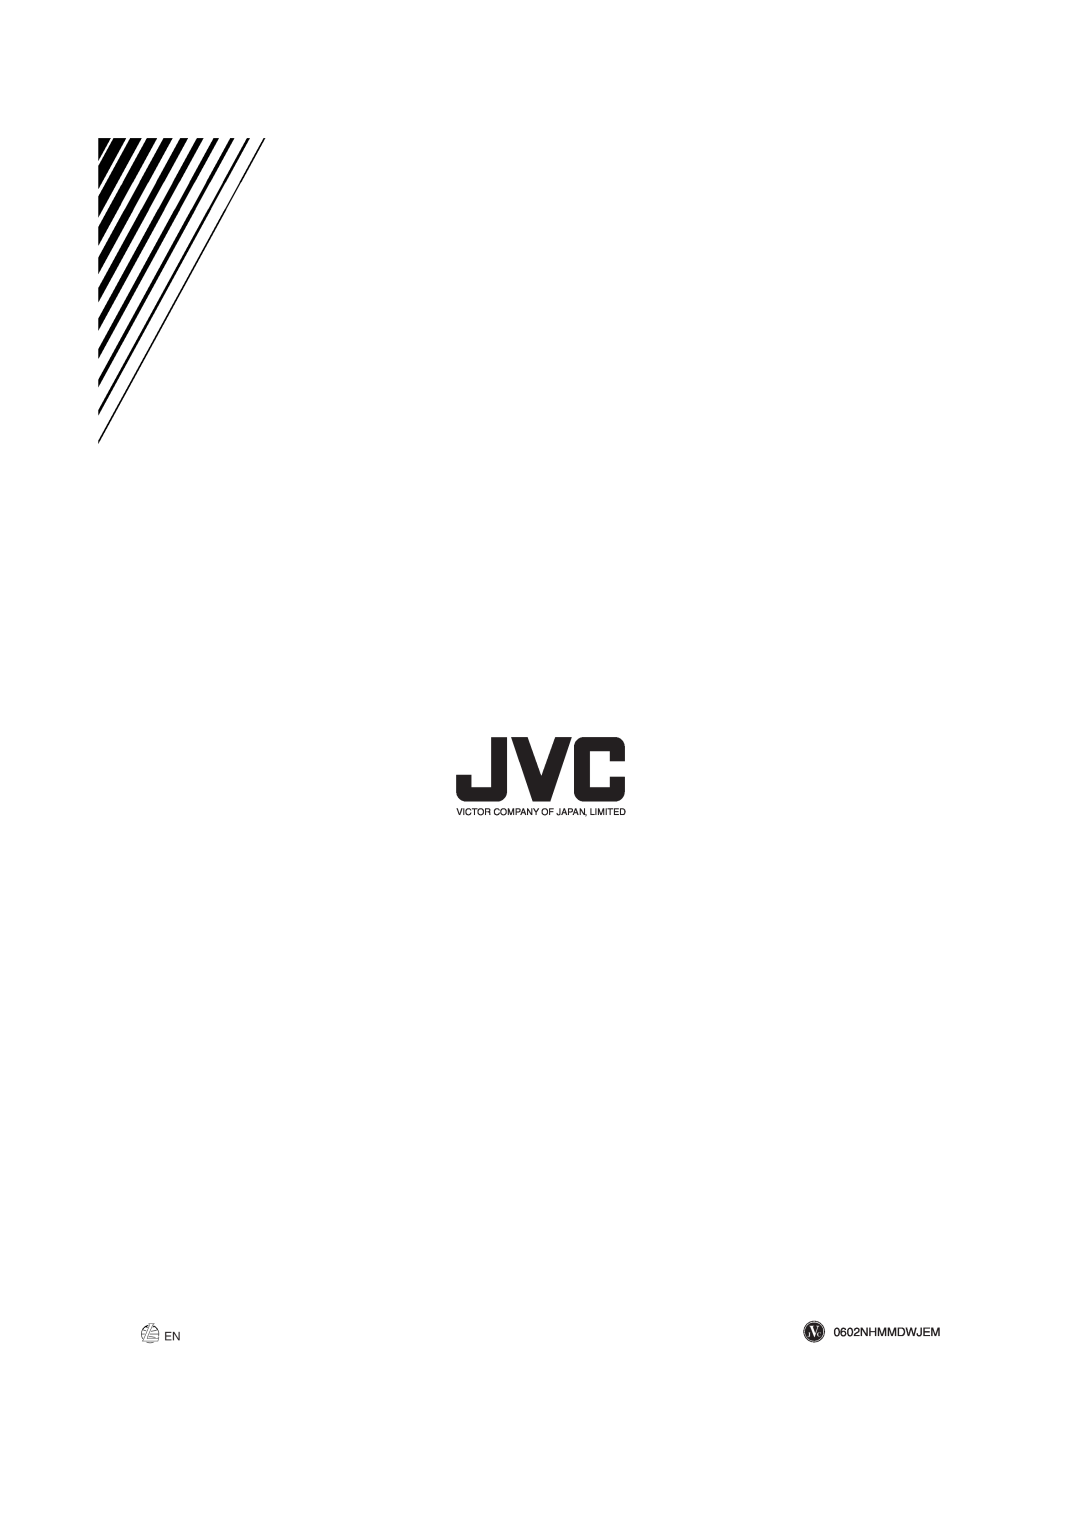 JVC RX-DV3RSL manual 0602NHMMDWJEM, Victor Company Of Japan, Limited 